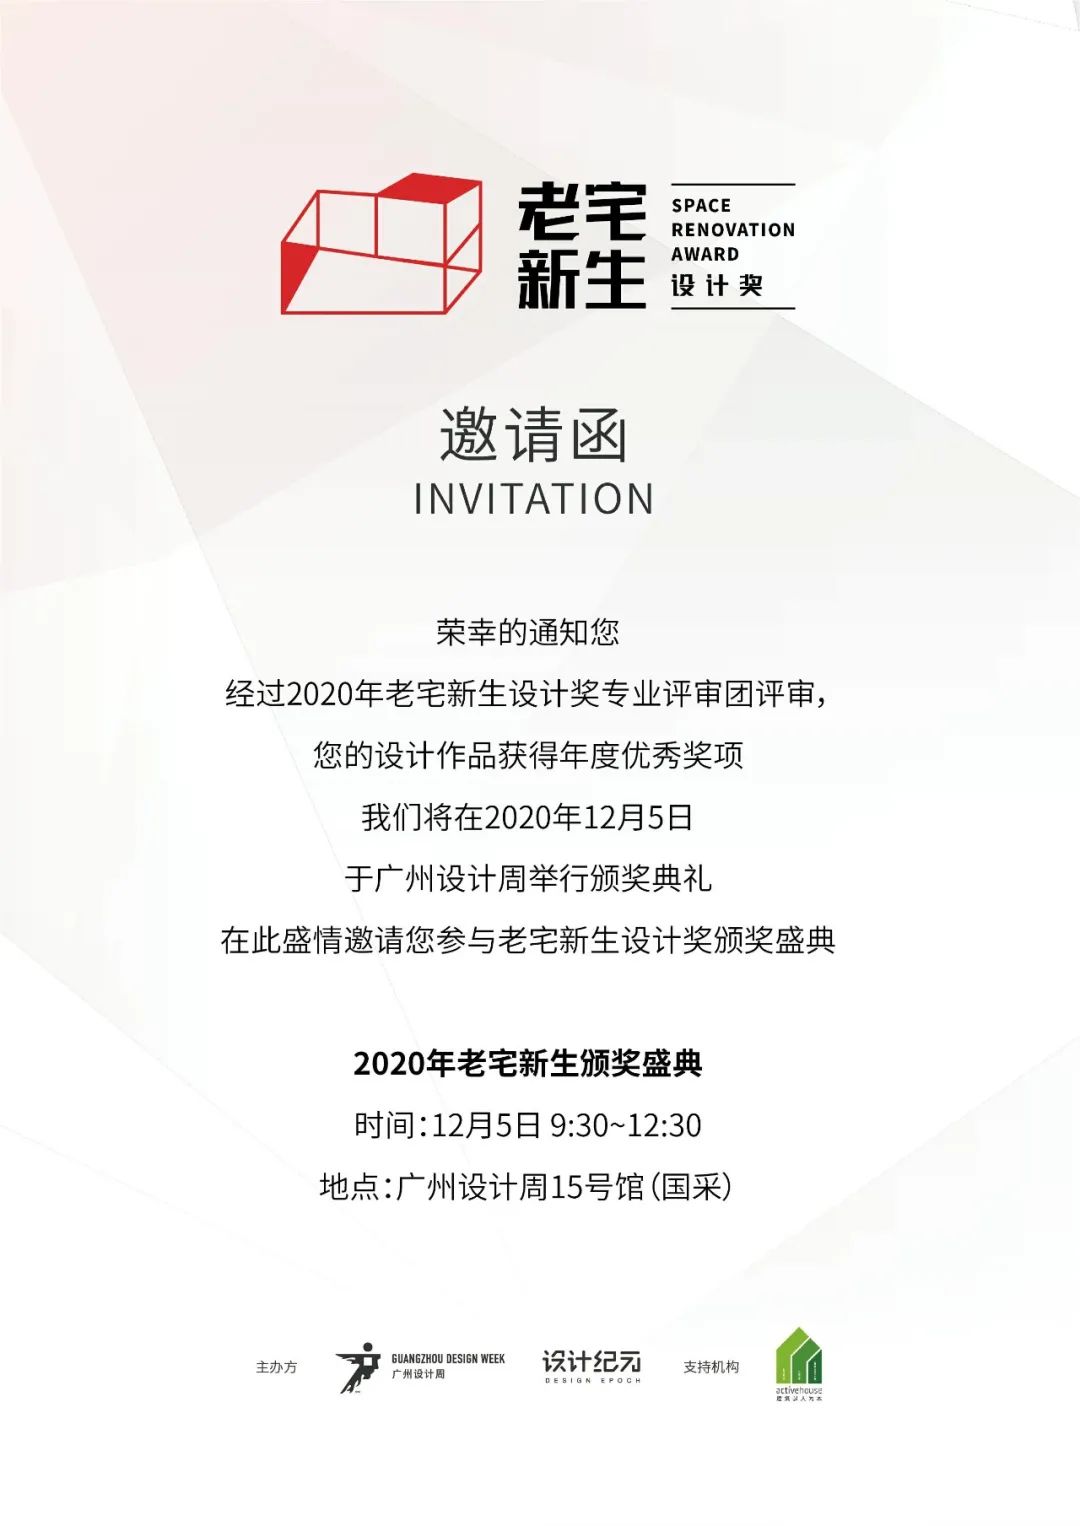 AG真人官方网址一宅一物设计总监凌英麒荣获2020年老宅新生年度优秀公共空间设计(图2)